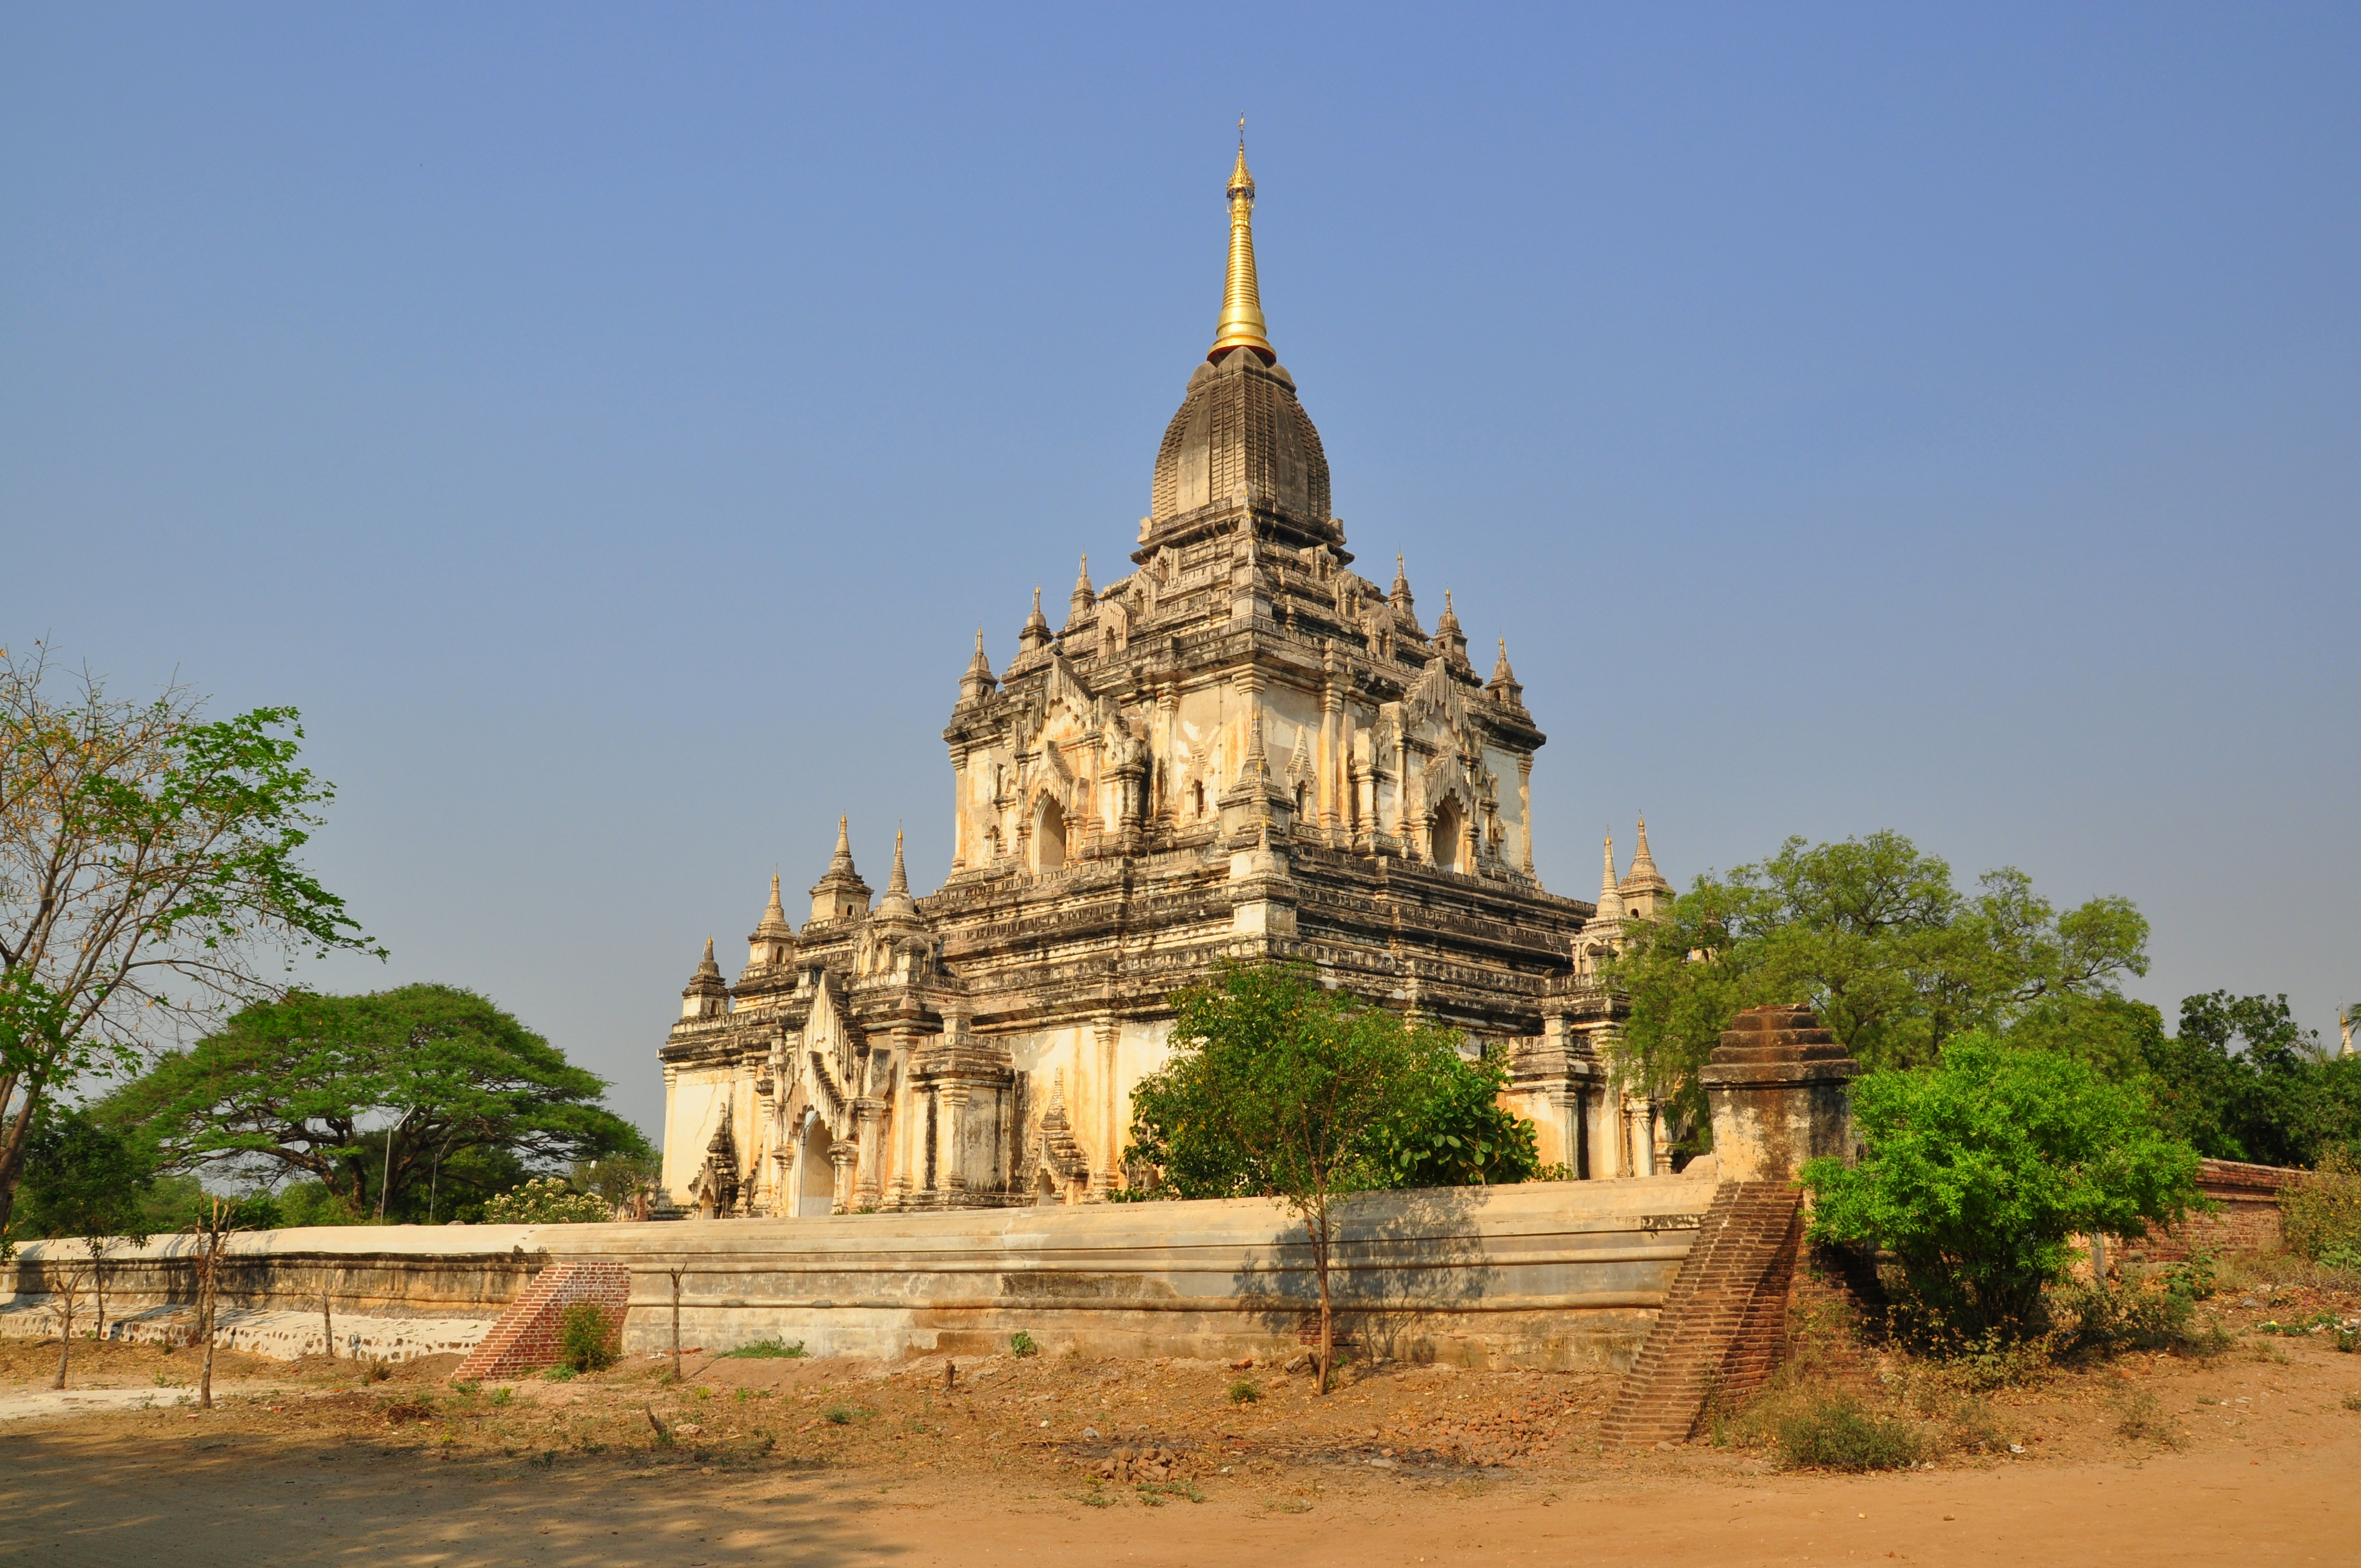 Gawdawpalin Temple - beautiful religious site